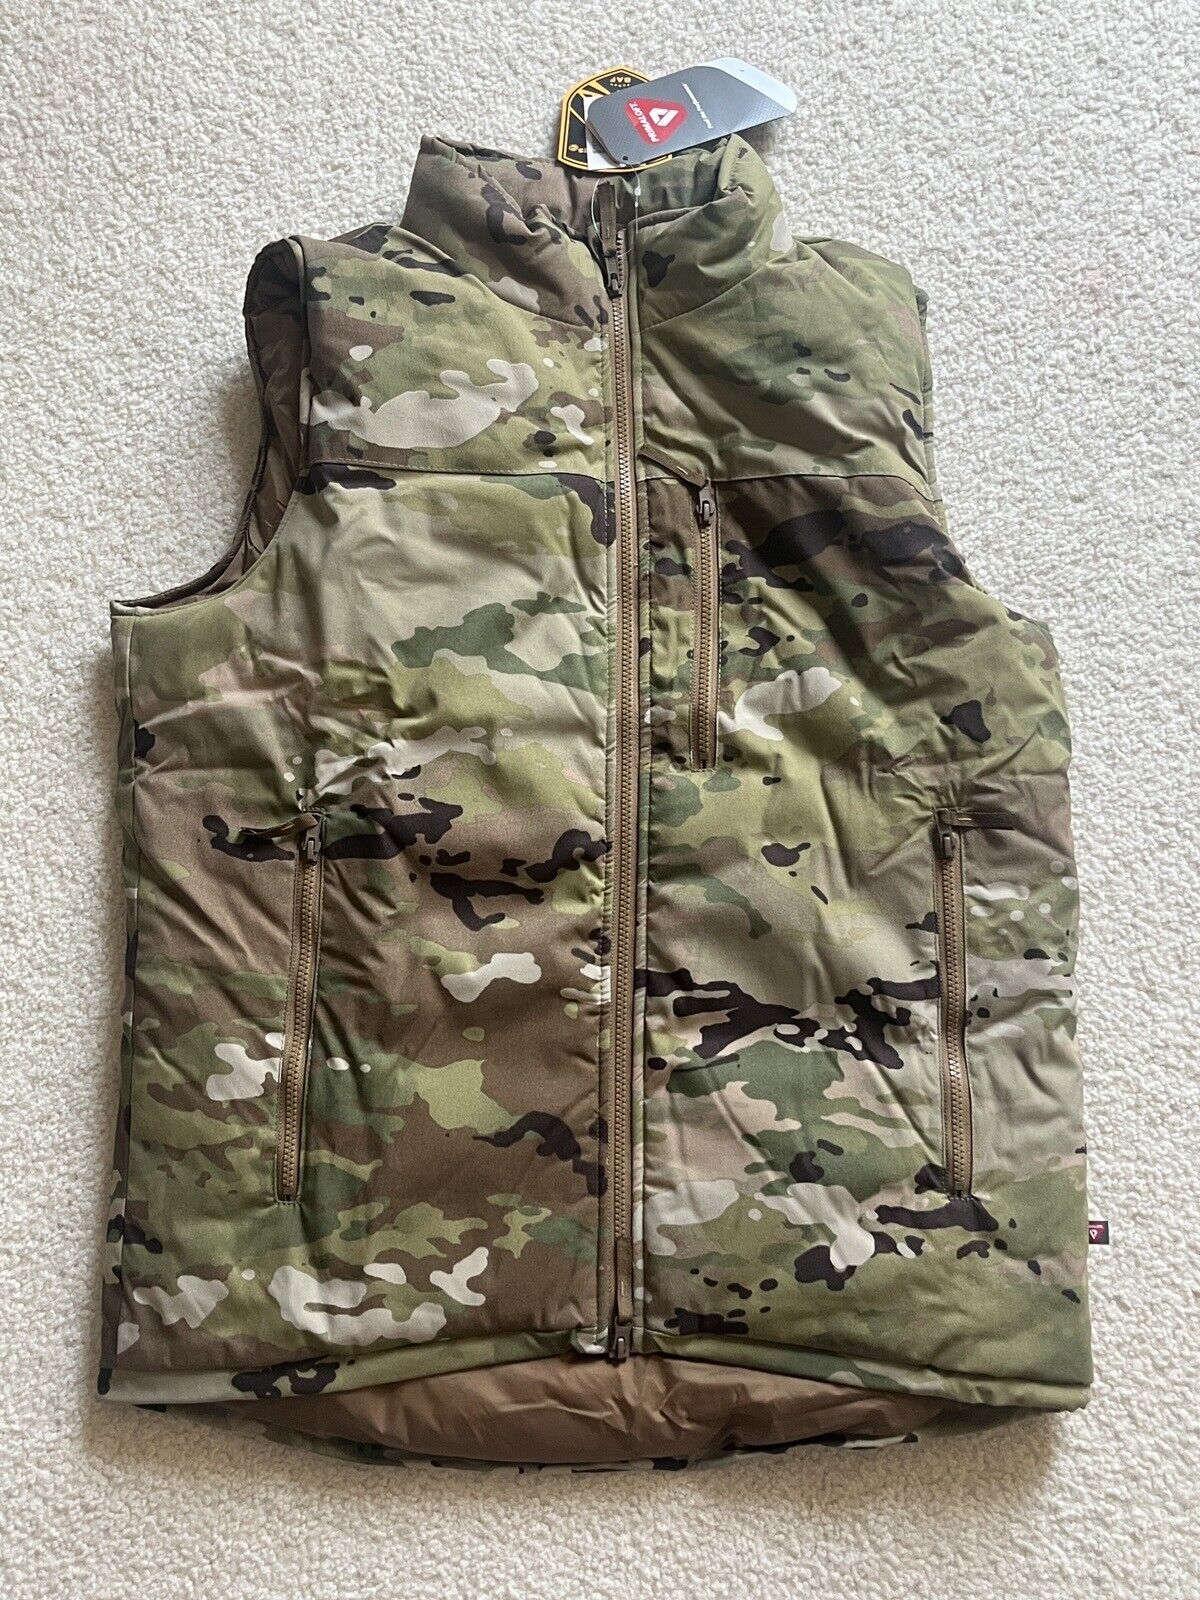 OCP Scorpio Level 7 ECWCS Vest Jacket BAF USGI Material Size Large BRAND NEW